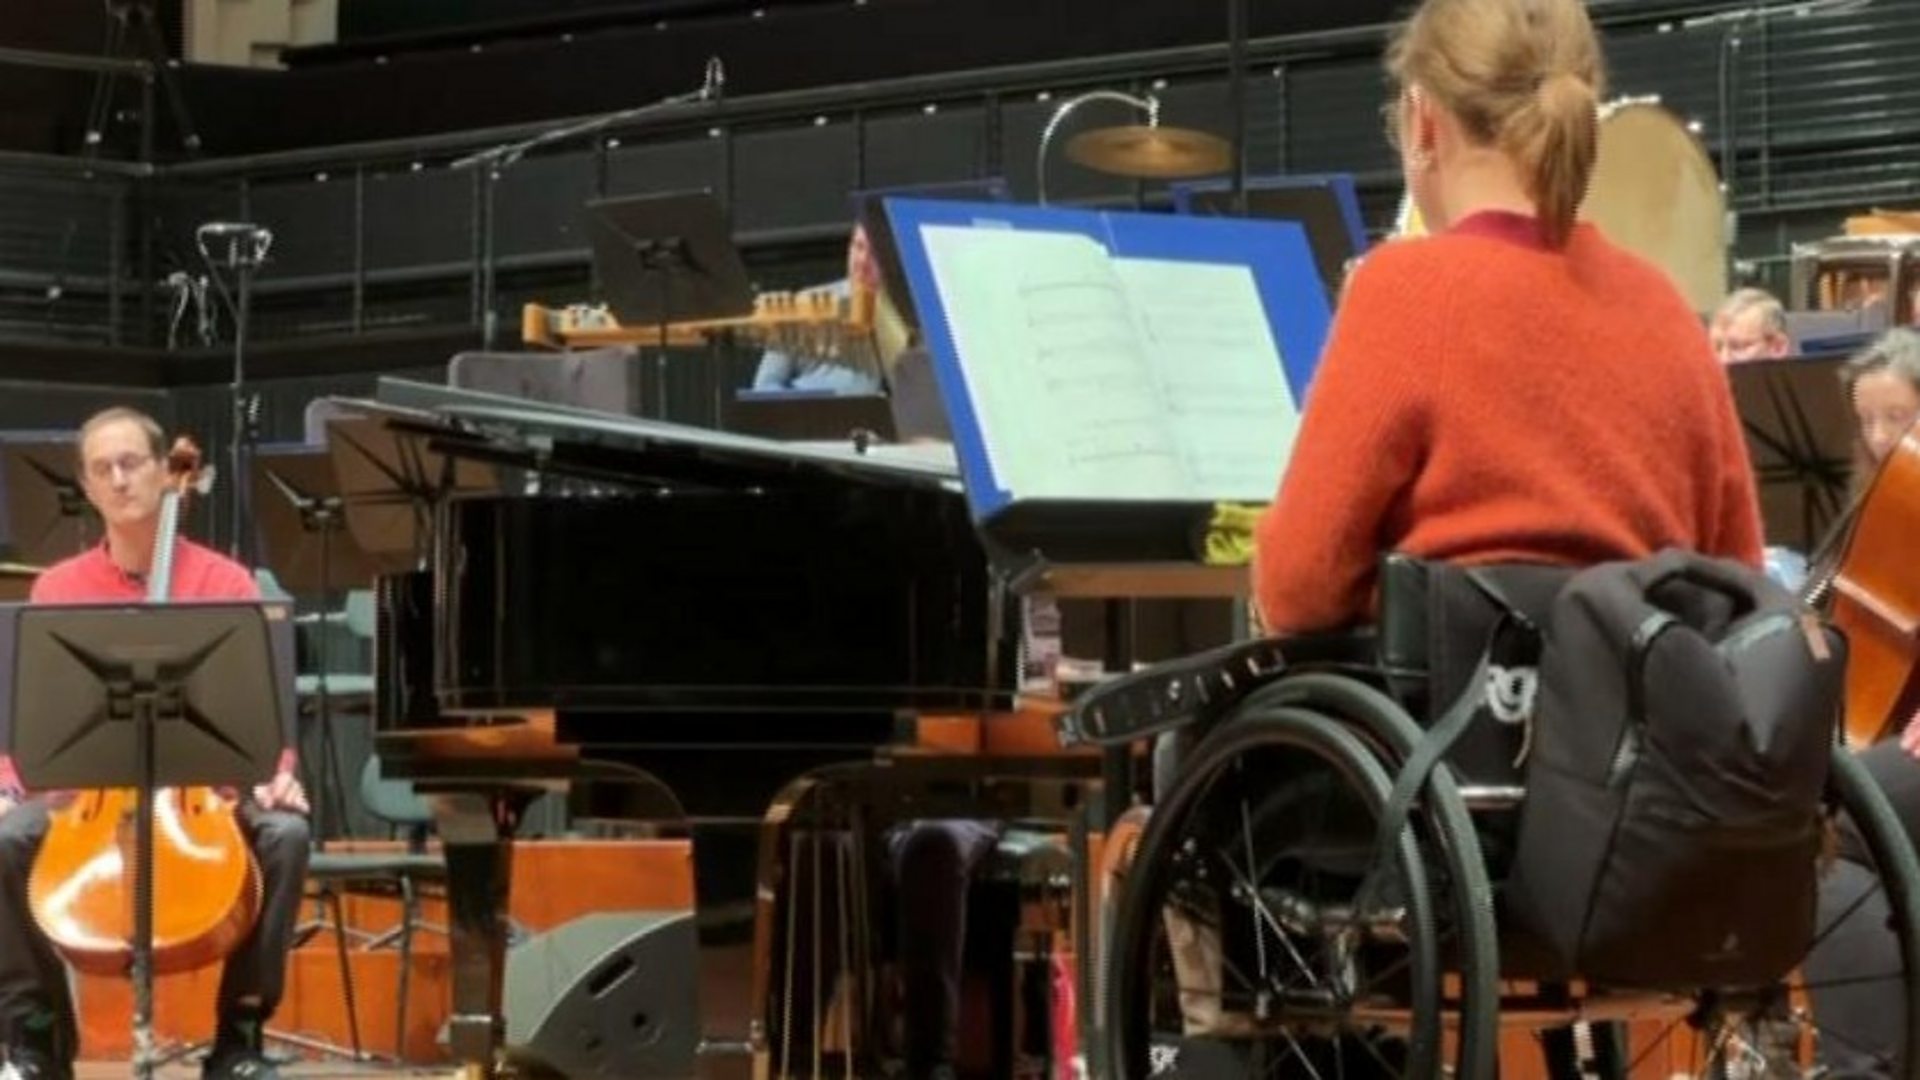 Propel Dance - UK's first all-wheelchair professional dance